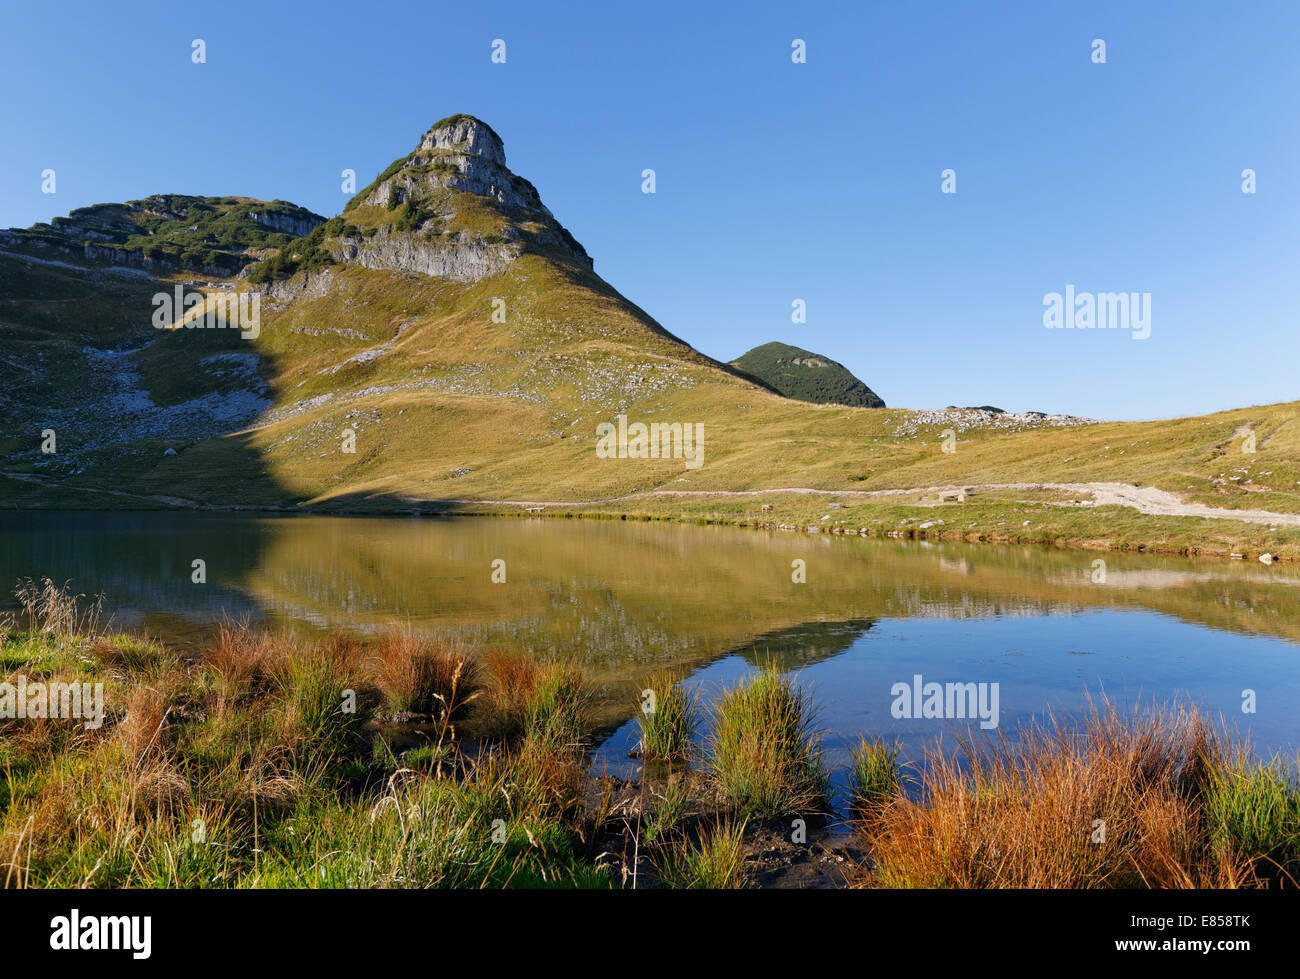 Augstsee Lake and Mt Atterkogel, Loser region, Totes Gebirge range, Altaussee, Ausseerland region, Salzkammergut, Styria Stock Photo